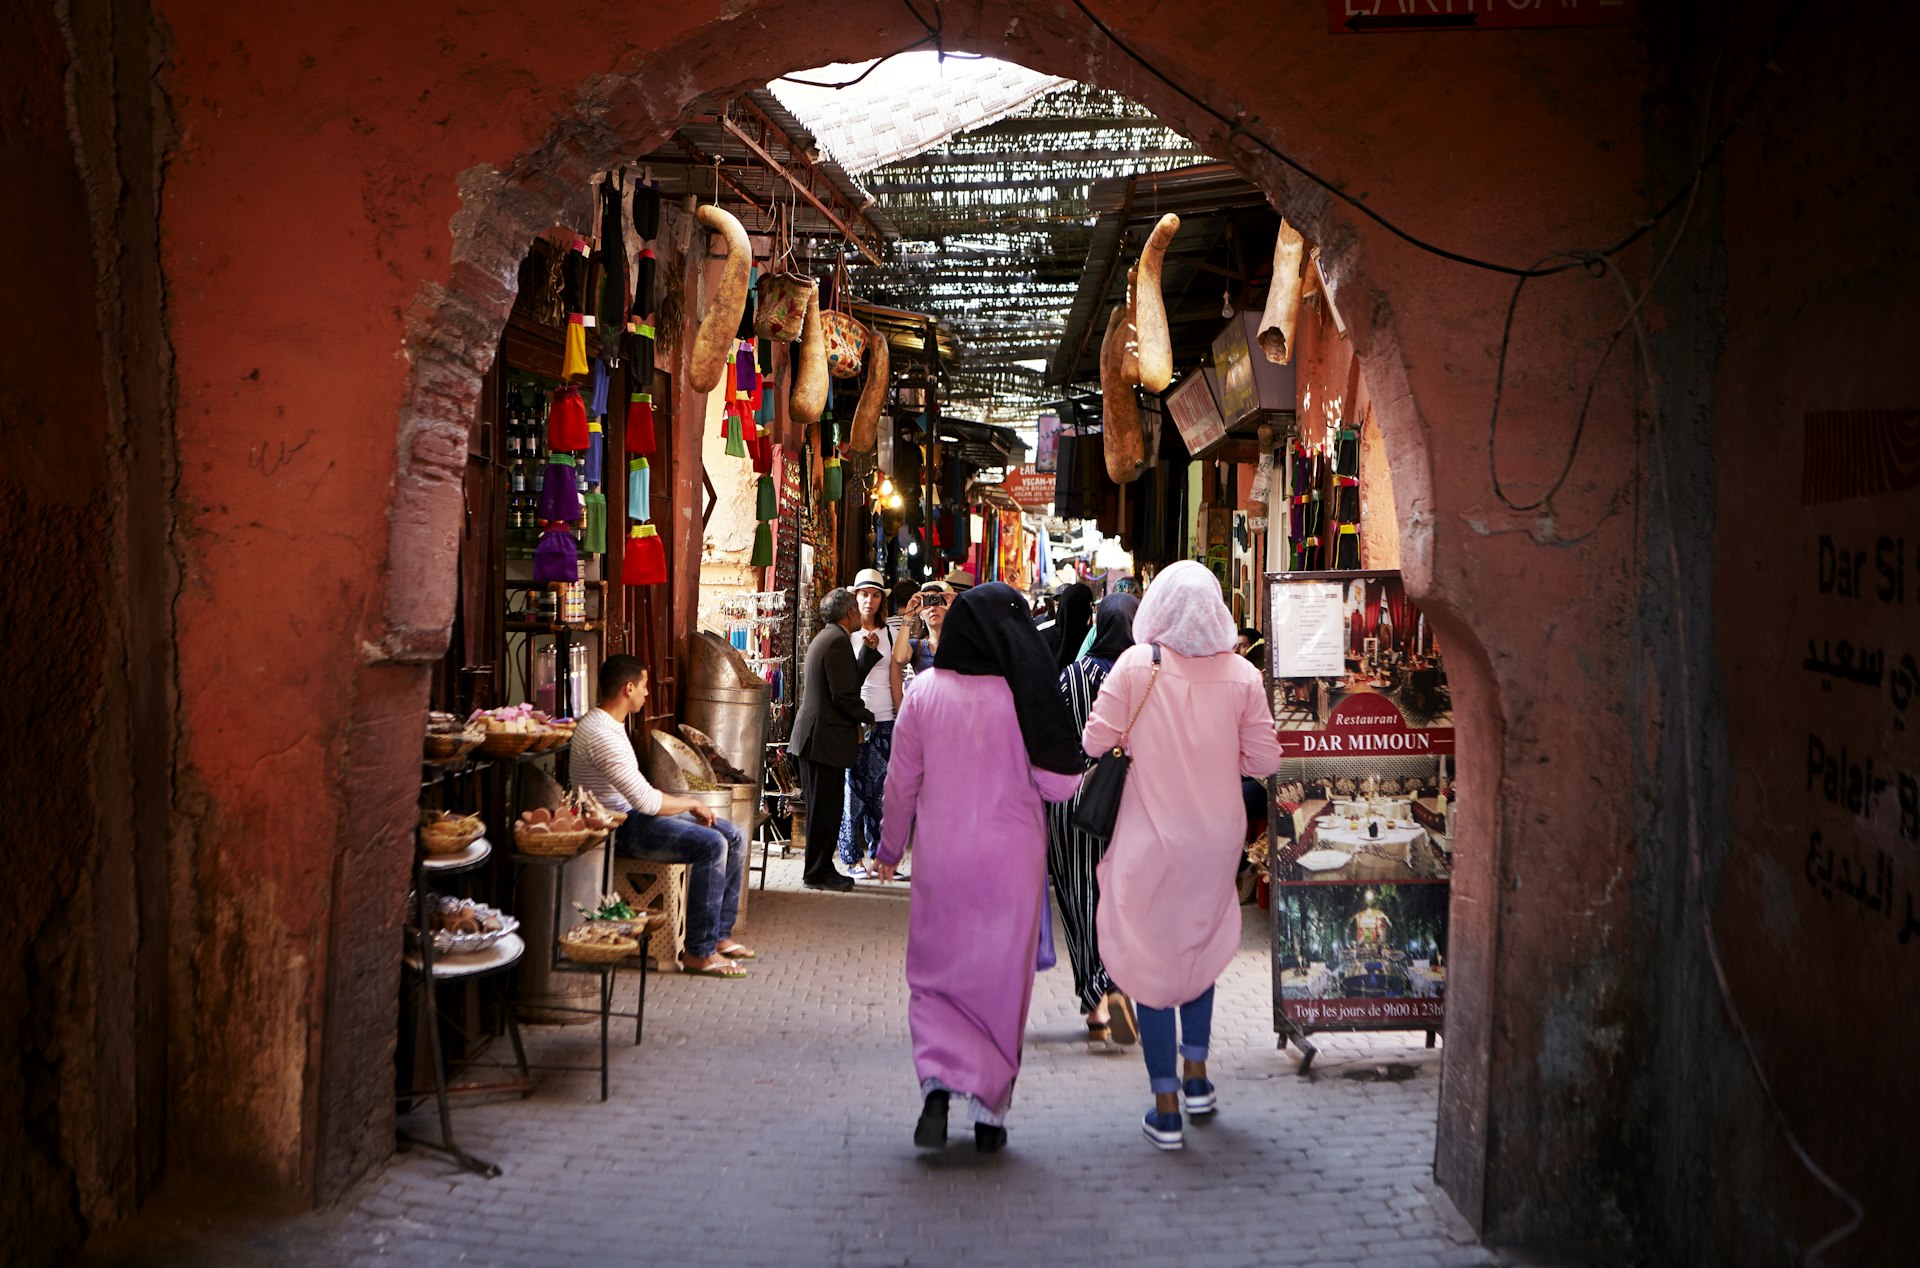 People walk through a stone arch in a medina